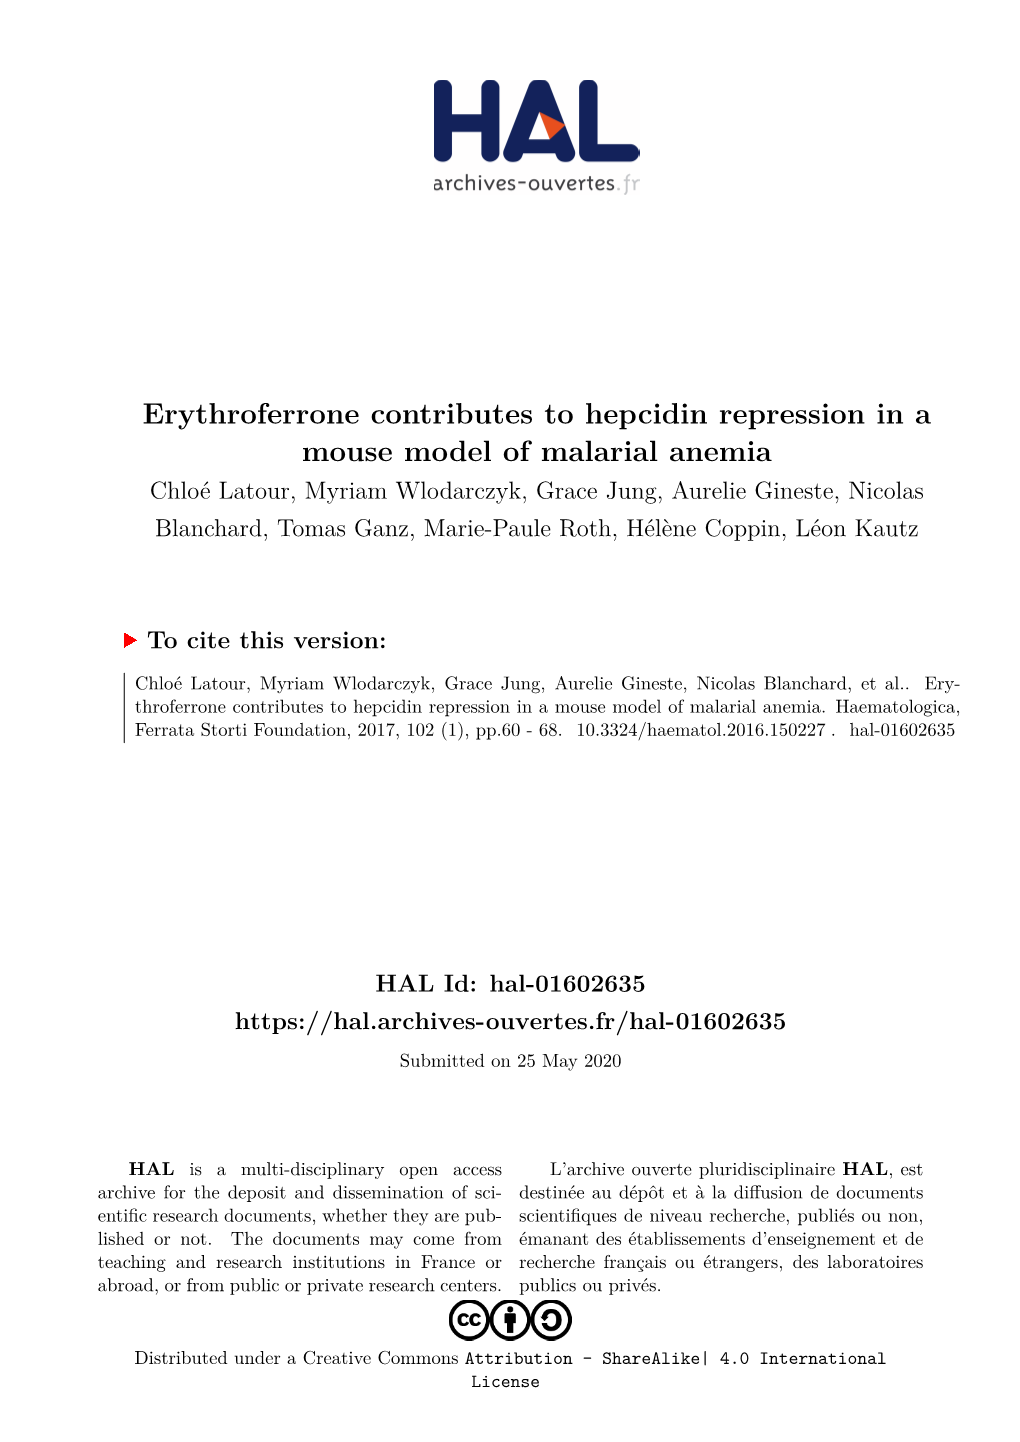 Erythroferrone Contributes to Hepcidin Repression in a Mouse Model of Malarial Anemia